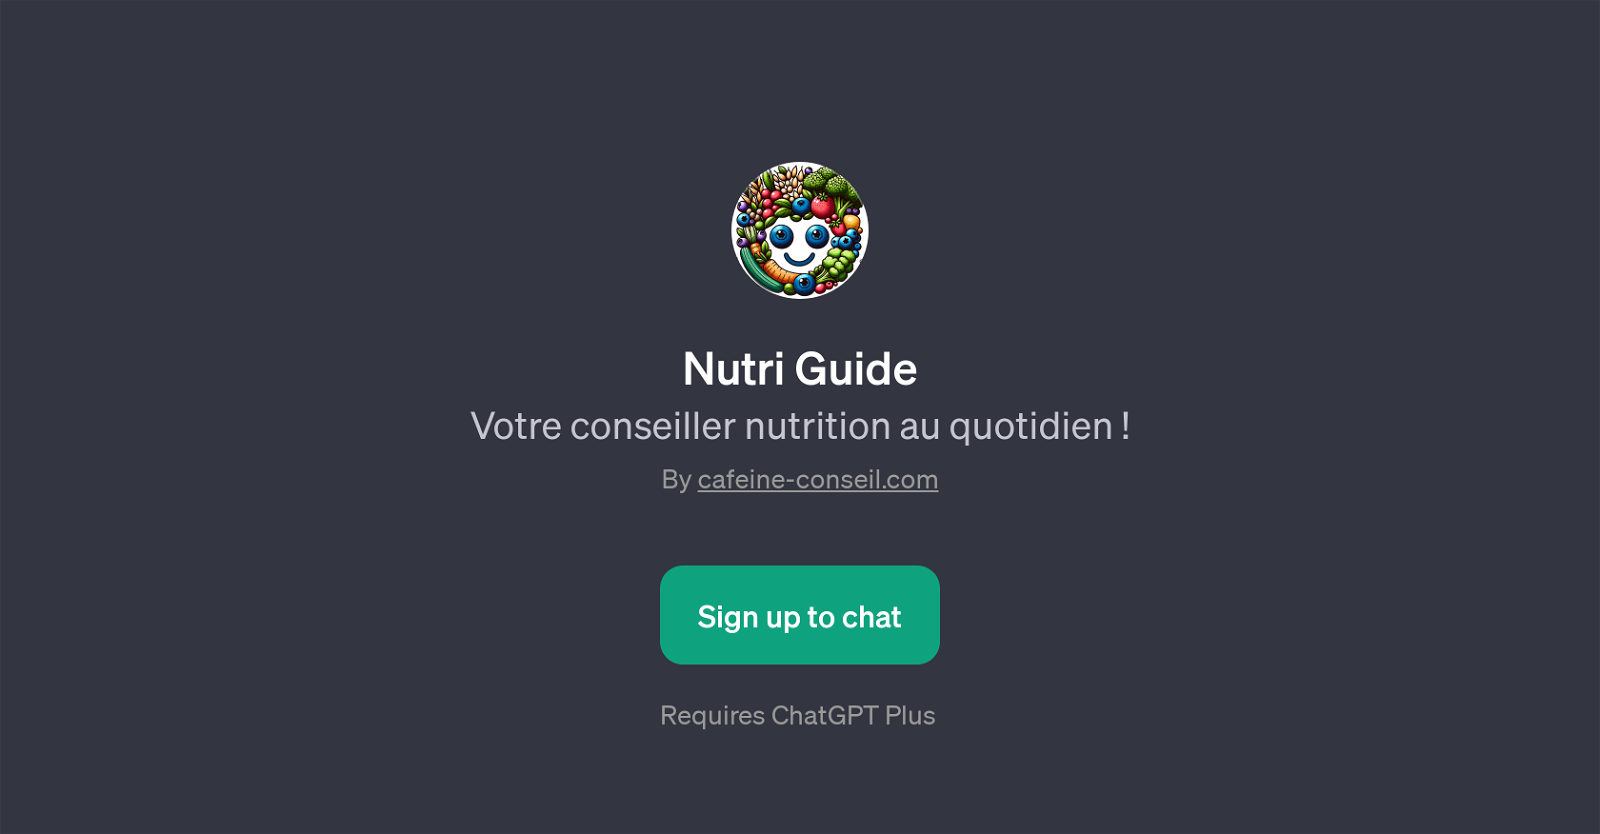 Nutri Guide website